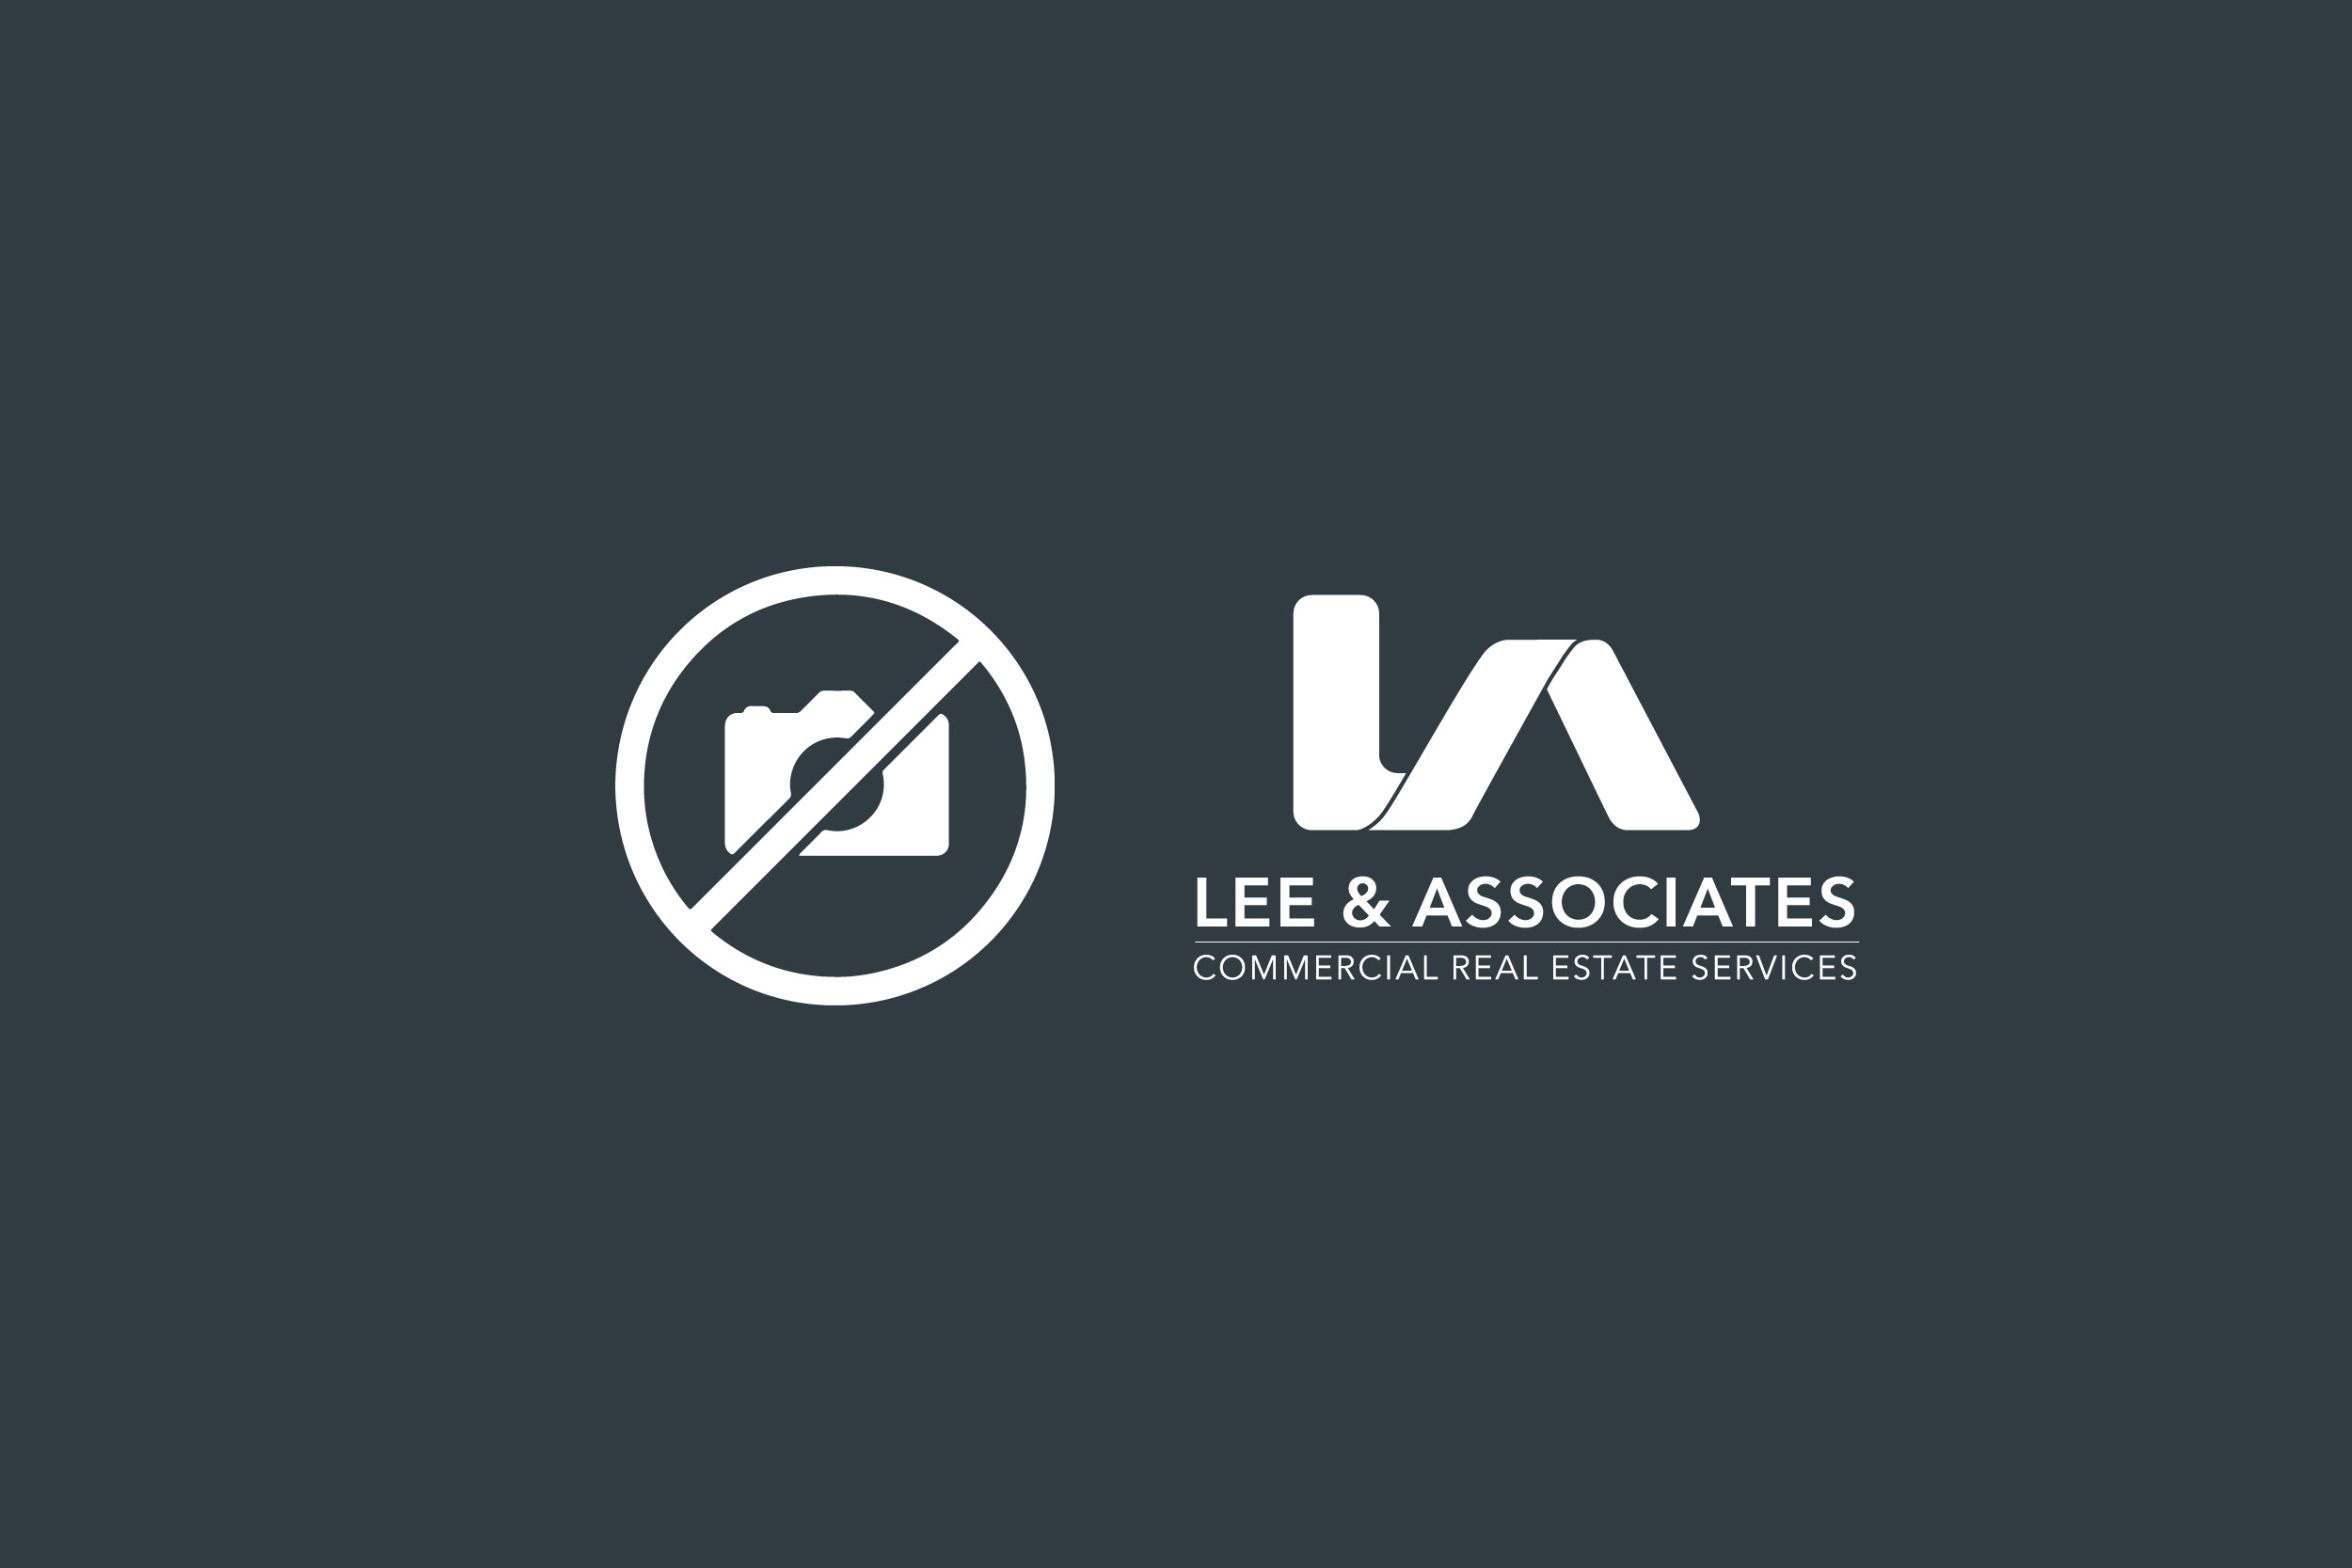 Lee & Associates Dallas Fort Worth Negotiates a 26,000 SF Industrial Sale Transaction